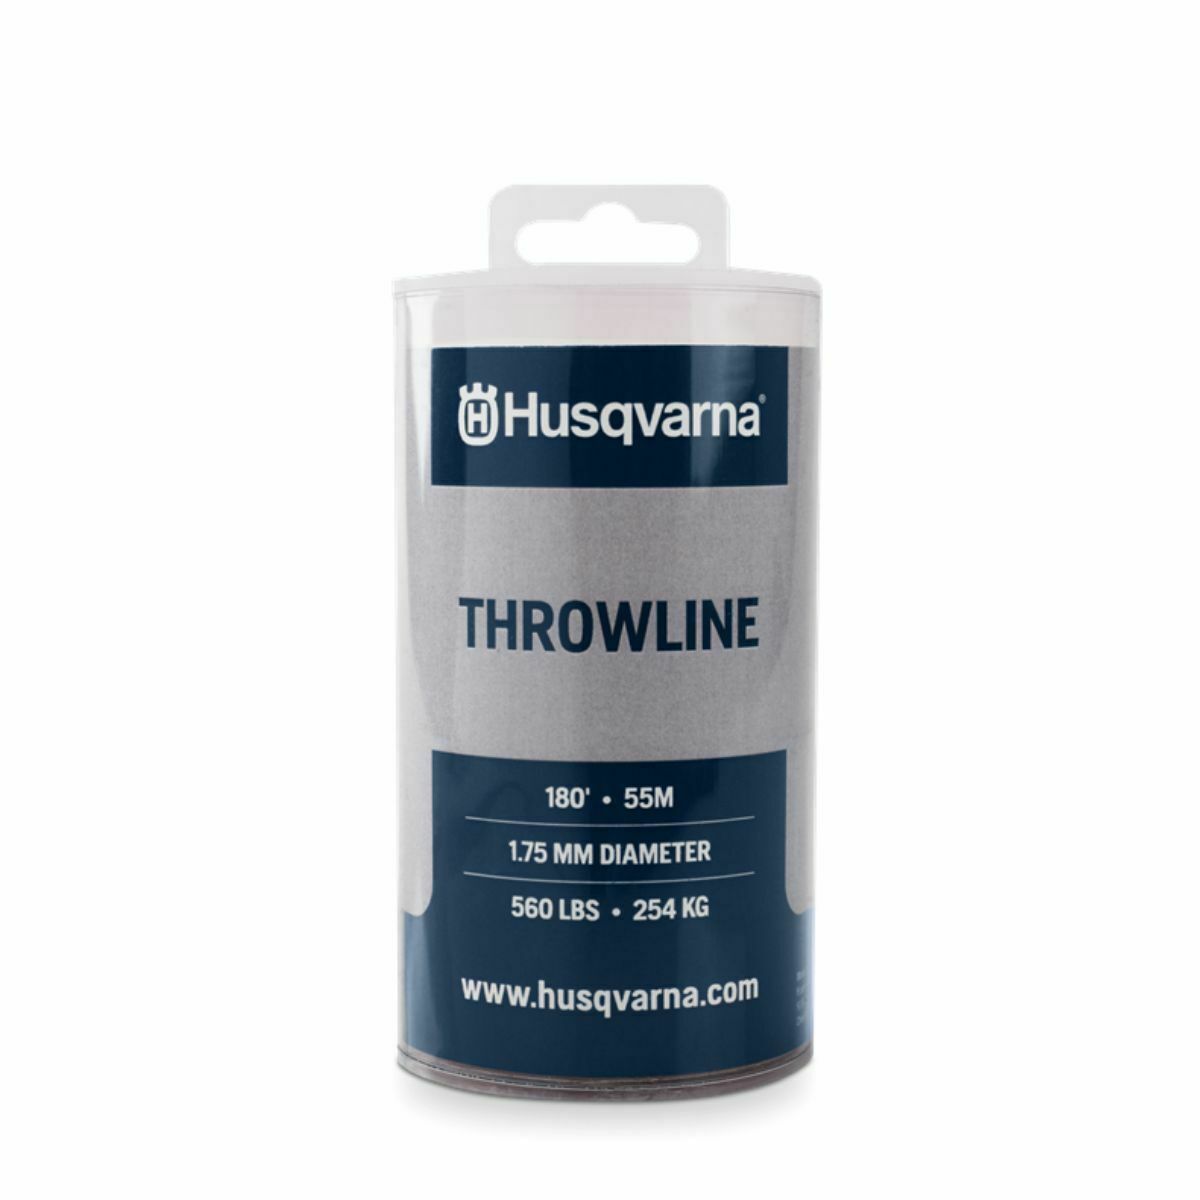 Primary image for Husqvarna 596935901 180' Throwline, 1.75mm diameter. 560 lb. tensile strength